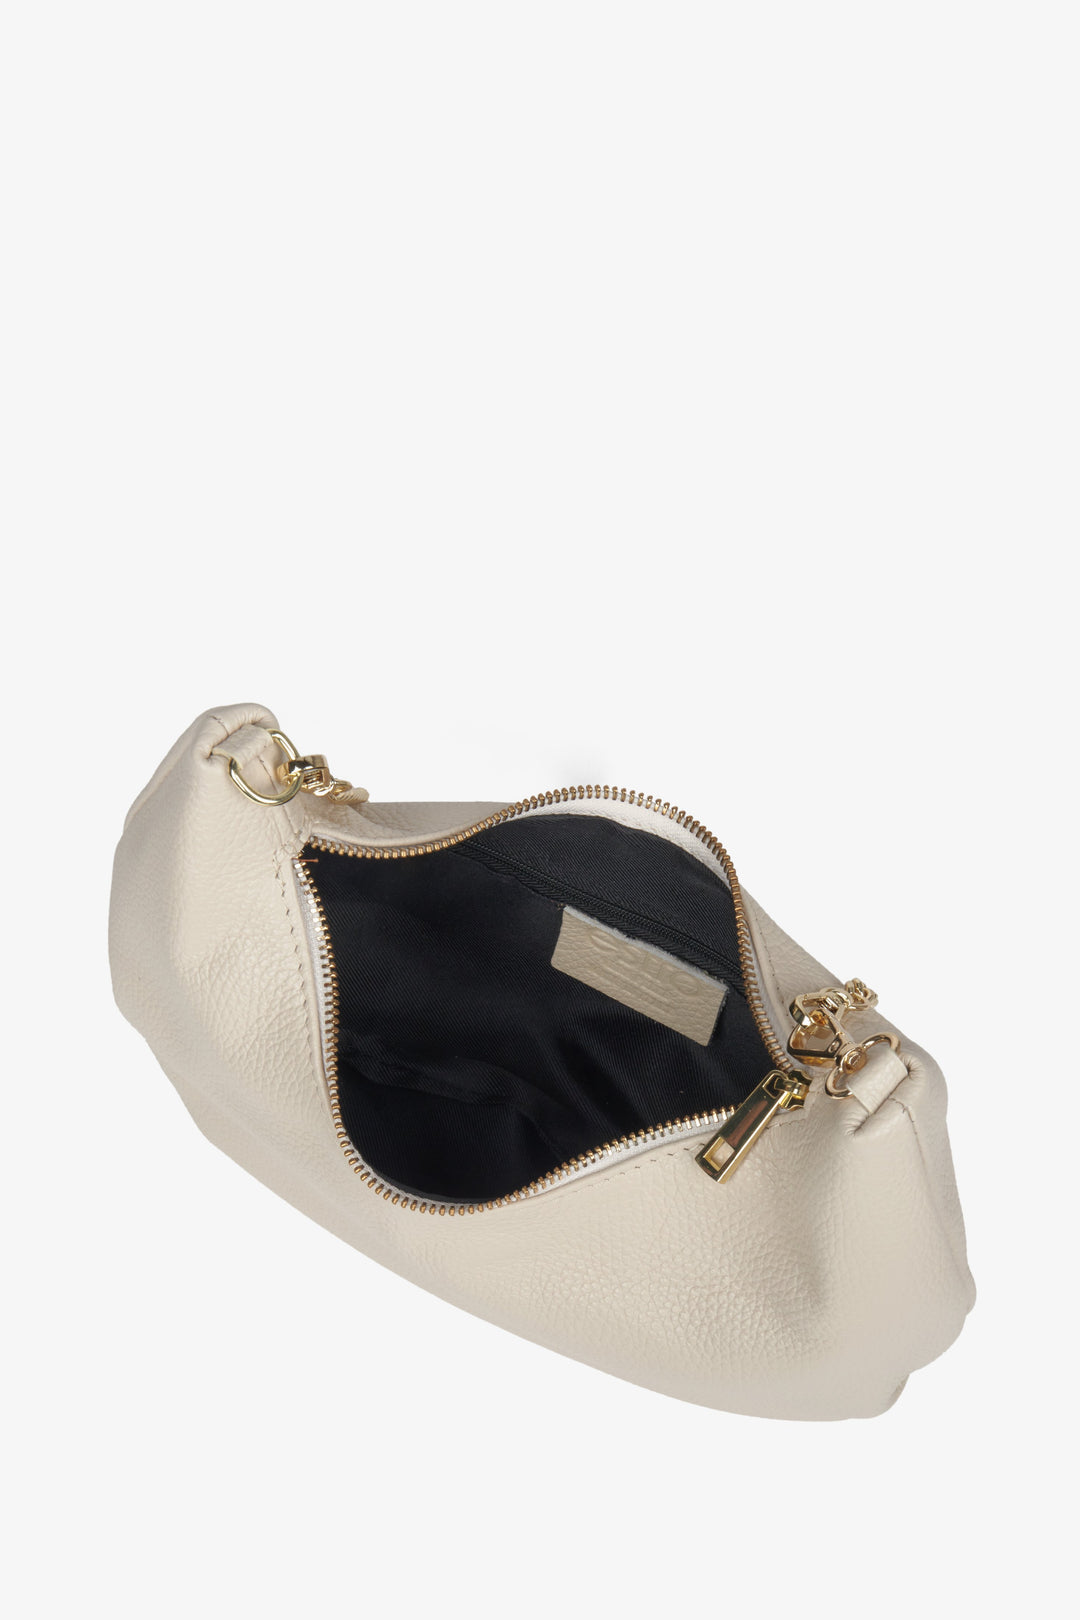 Women's small light beige handbag by Estro with a golden chain.